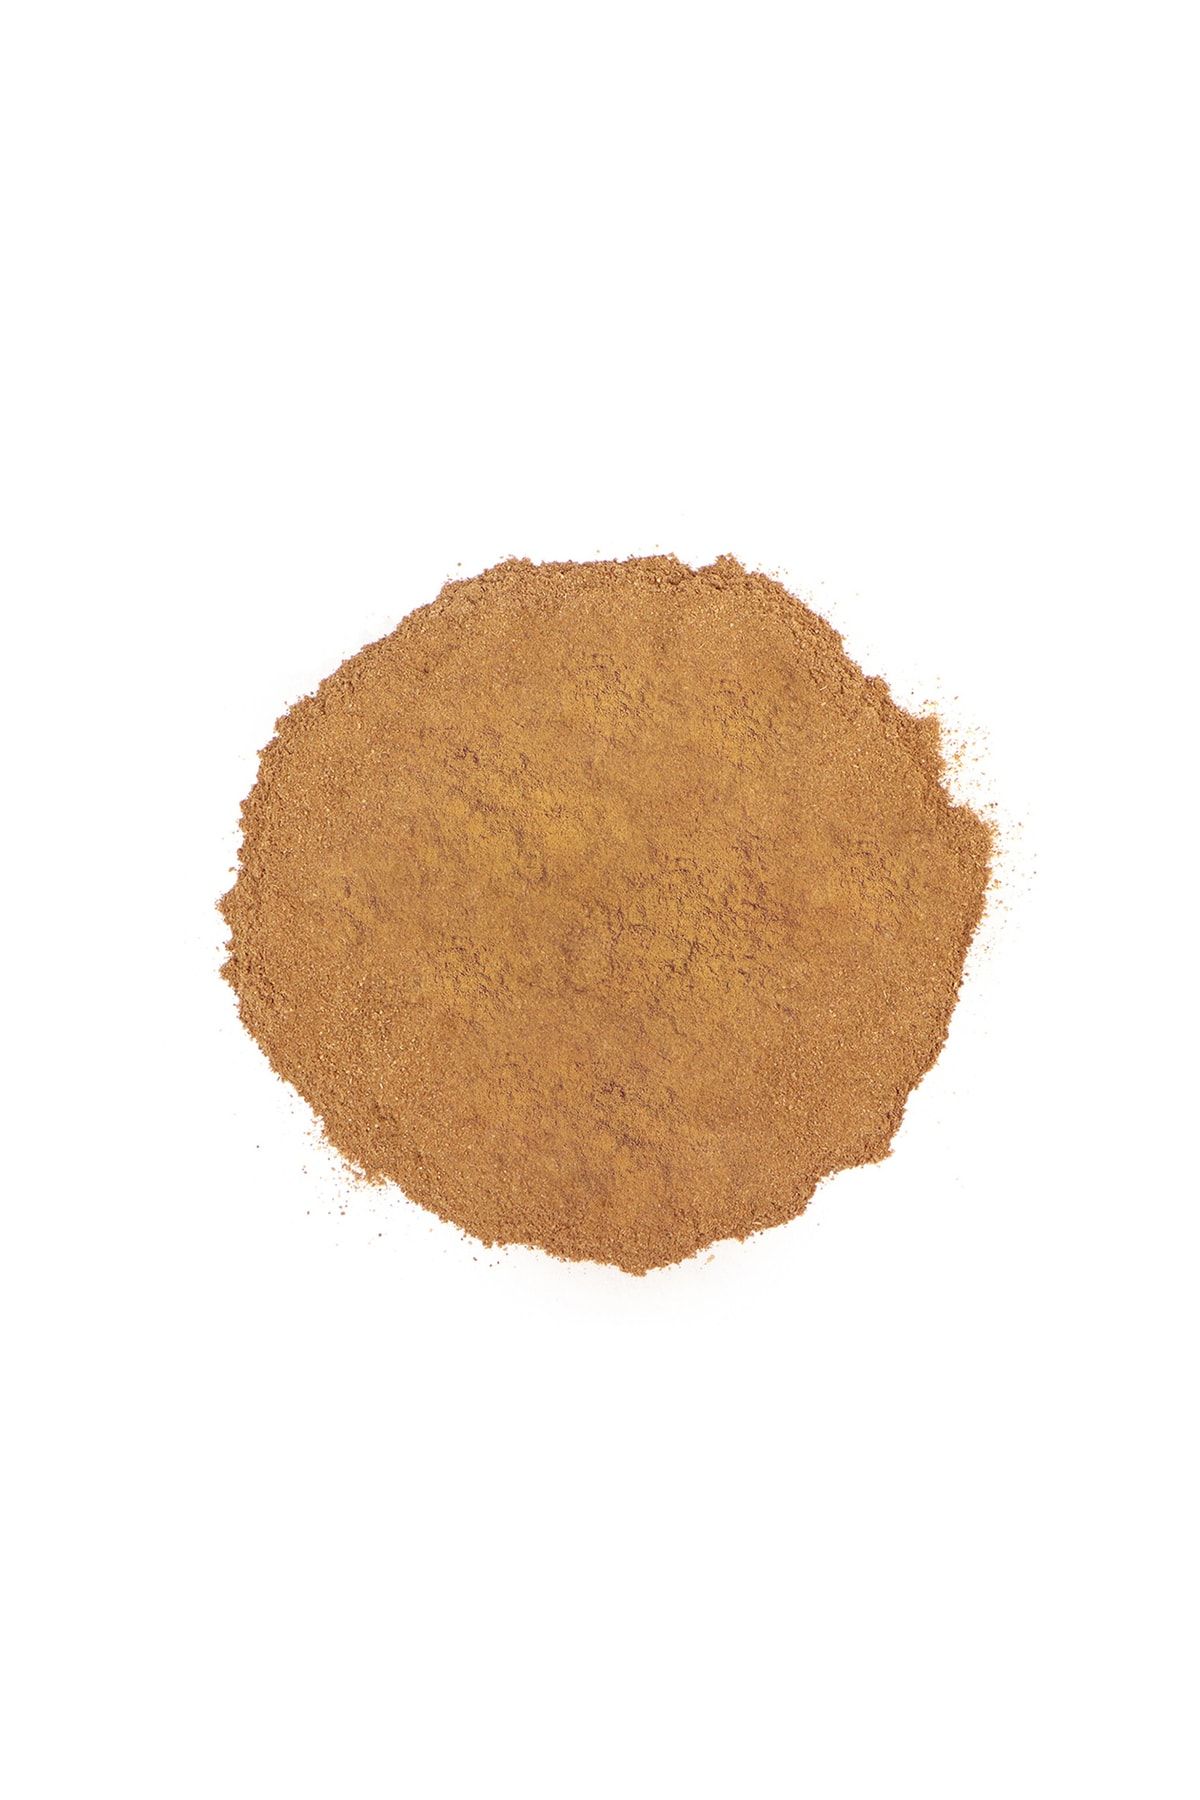 SELNUS Tarçın ( Öğütülmüş Toz ) 100 gram Cinnamomum Verum